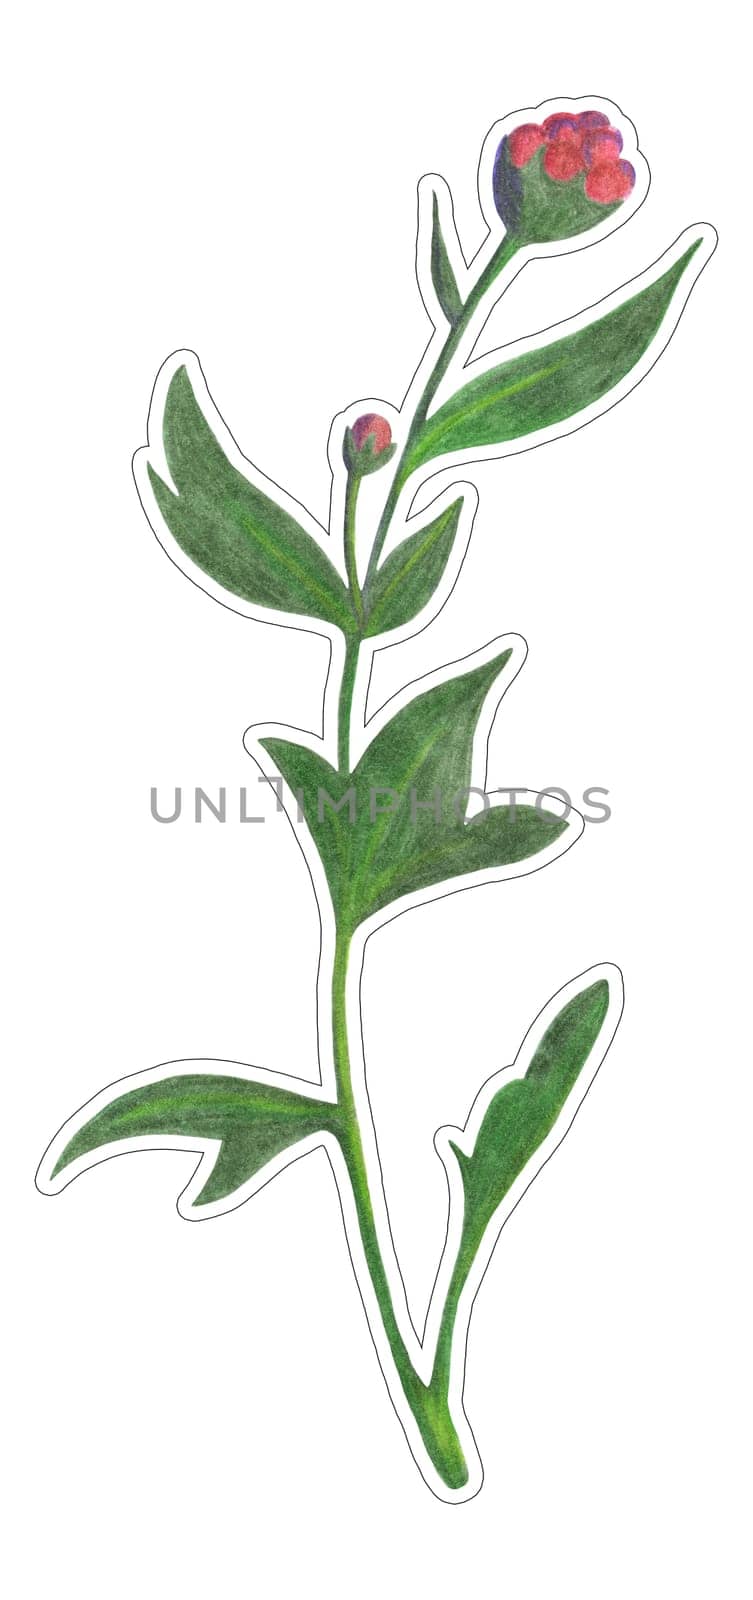 Hand Drawn Red Chrysanthemum Sticker Isolated on White Background. by Rina_Dozornaya